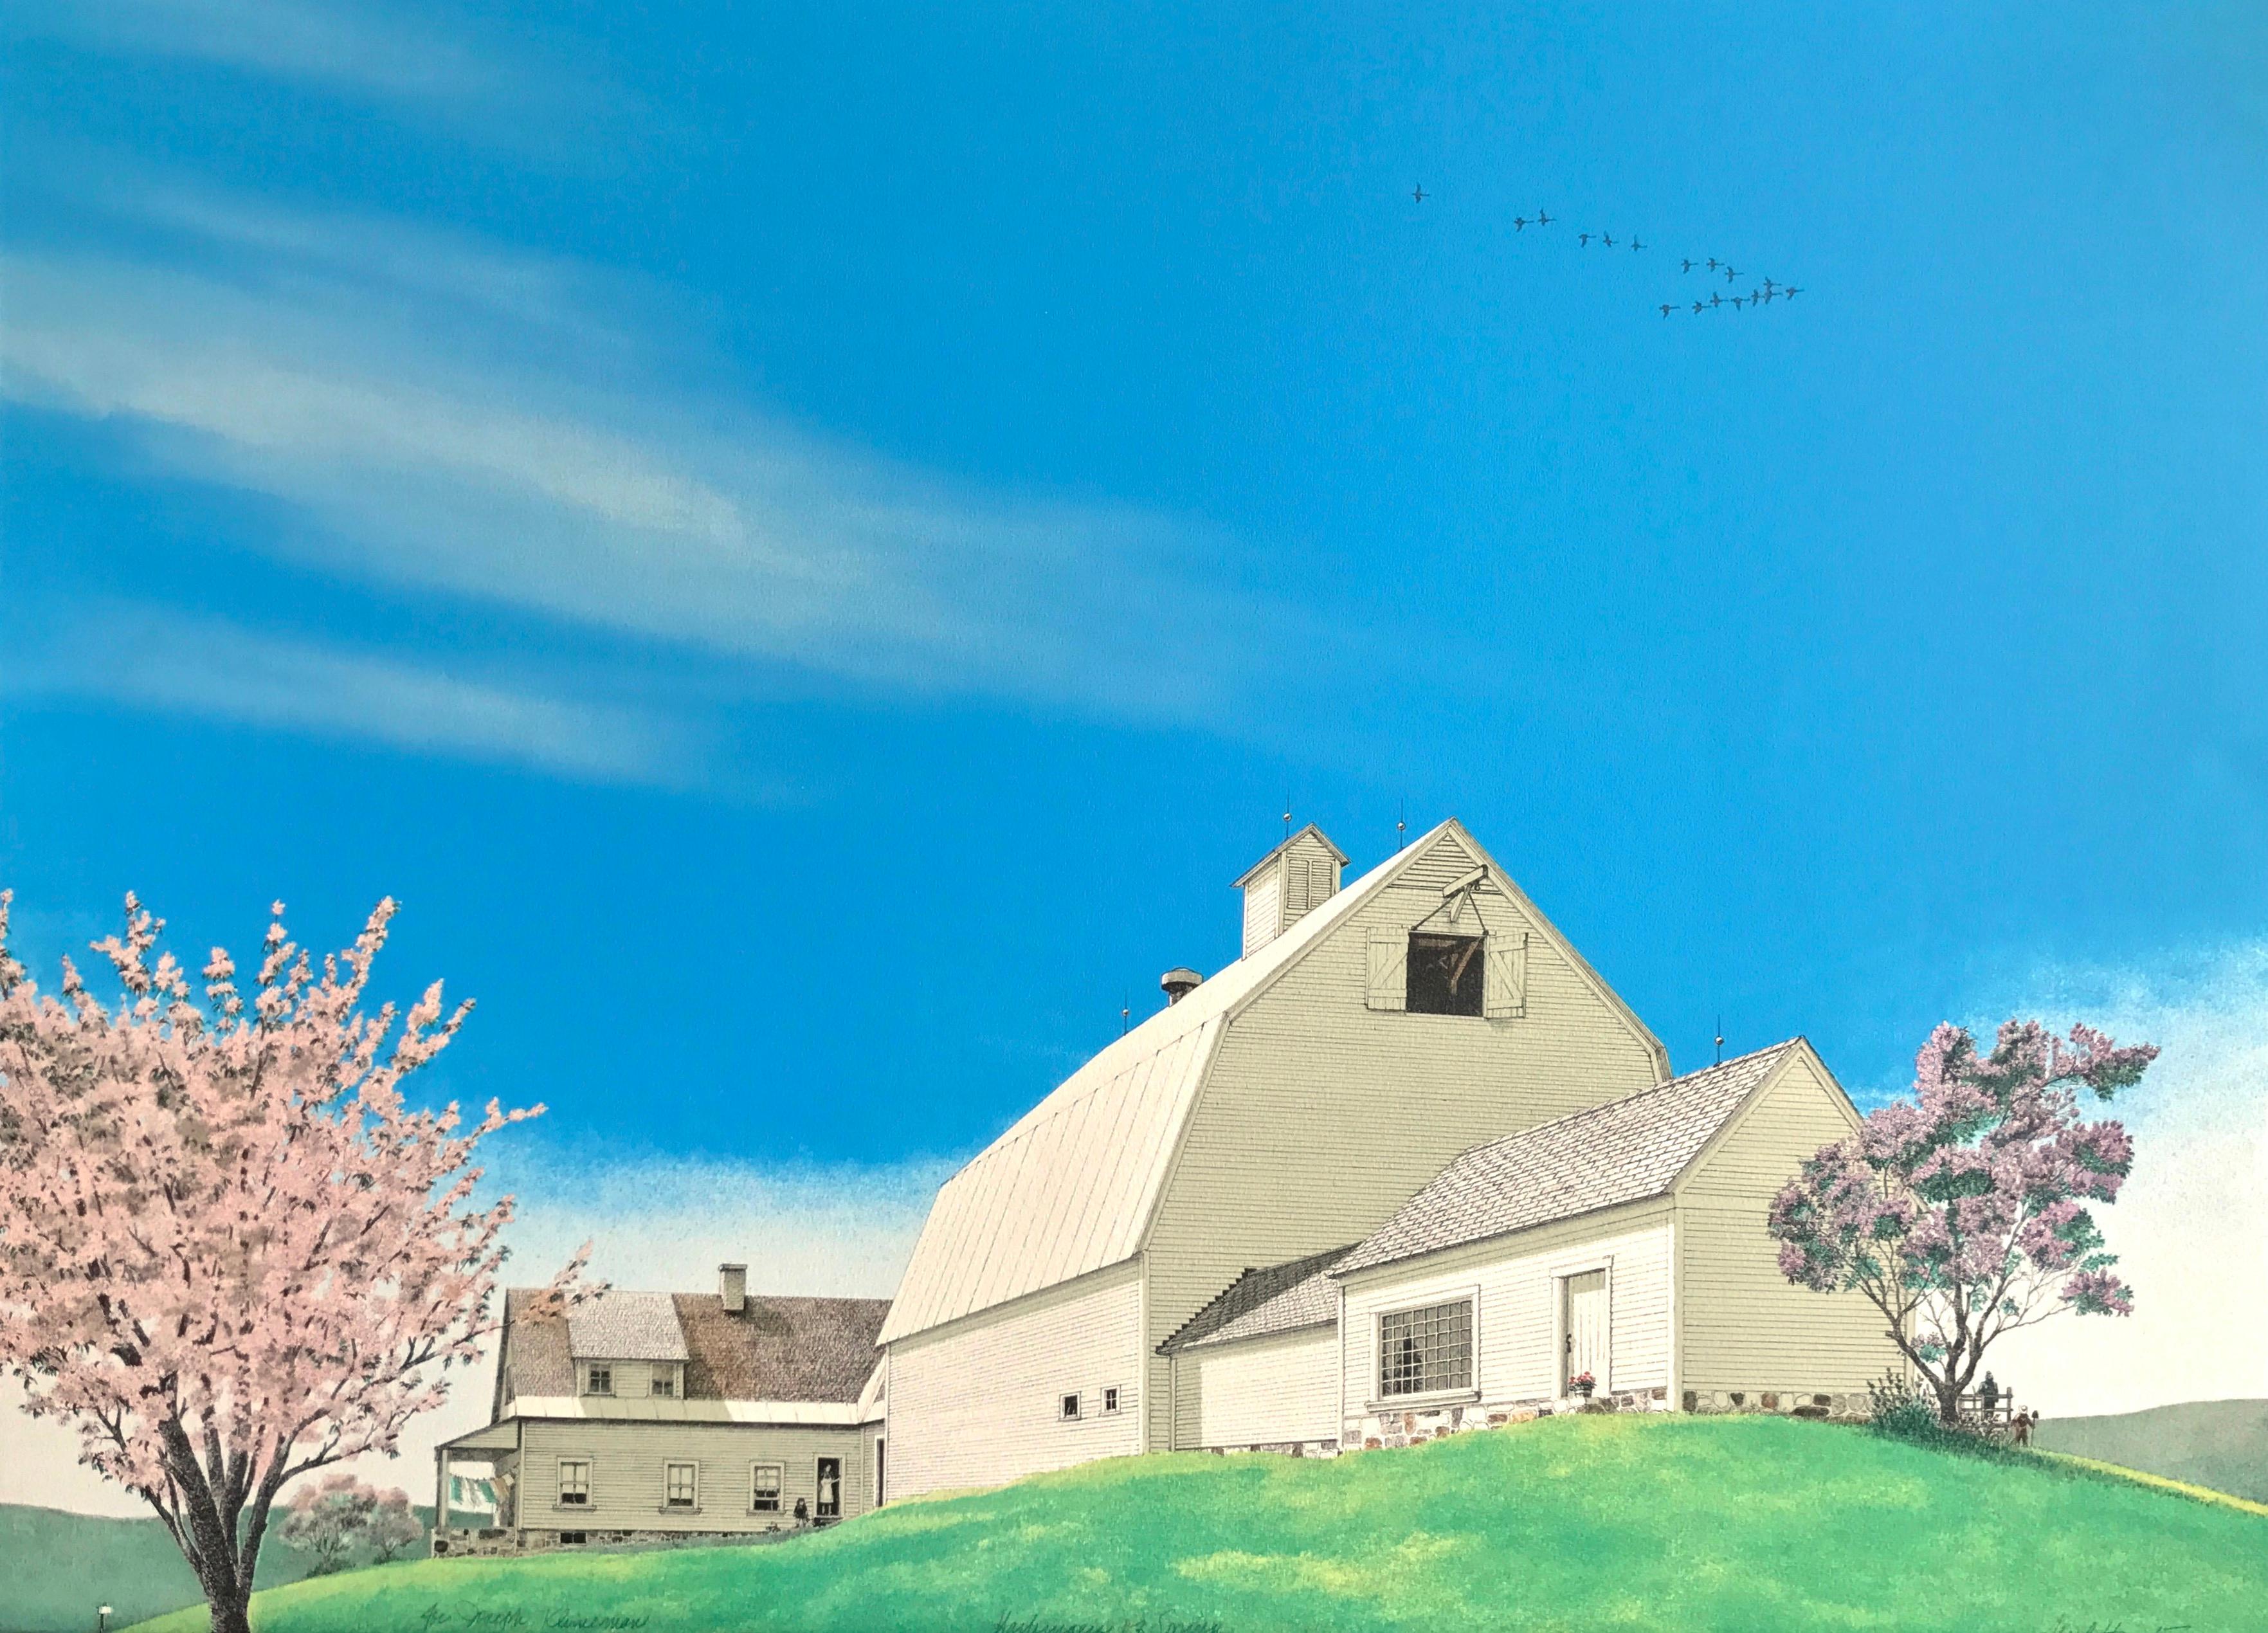 HARBINGER OF SPRING Signed Lithograph, Farm House Landscape Blue Sky White Barn